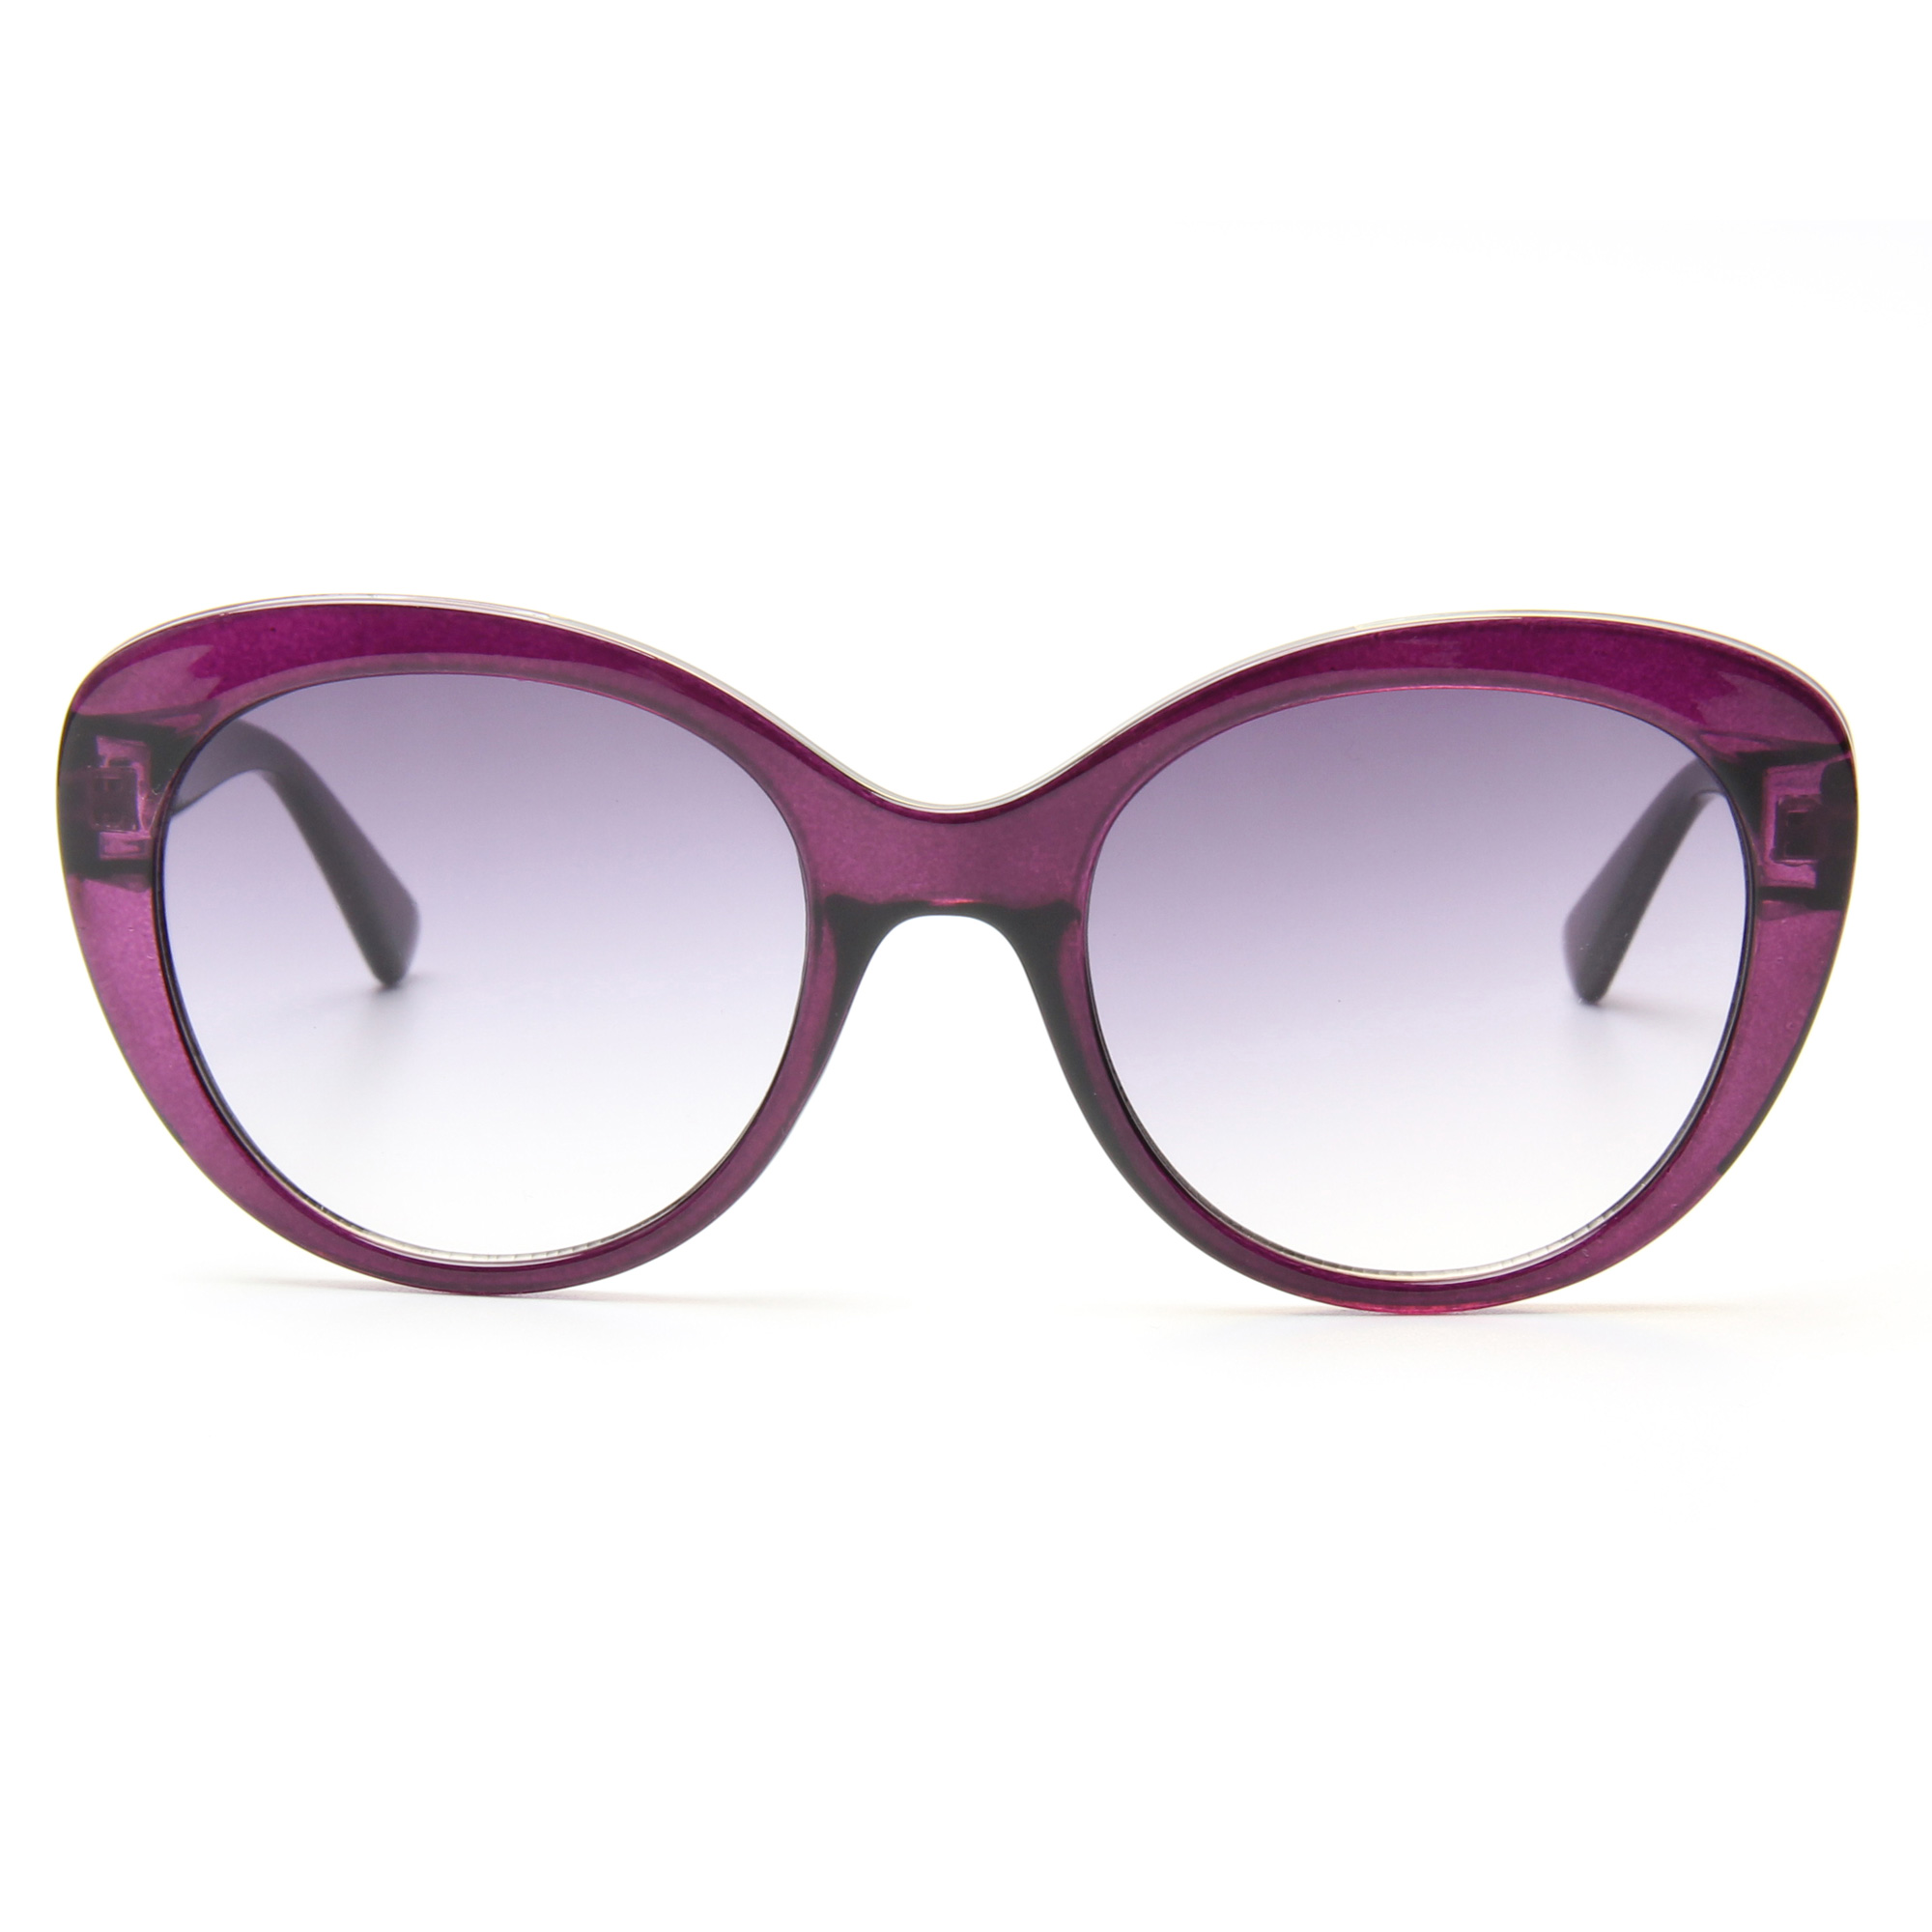 Eugenia beautiful design women fashion sunglasses national standard for Eye Protection-2